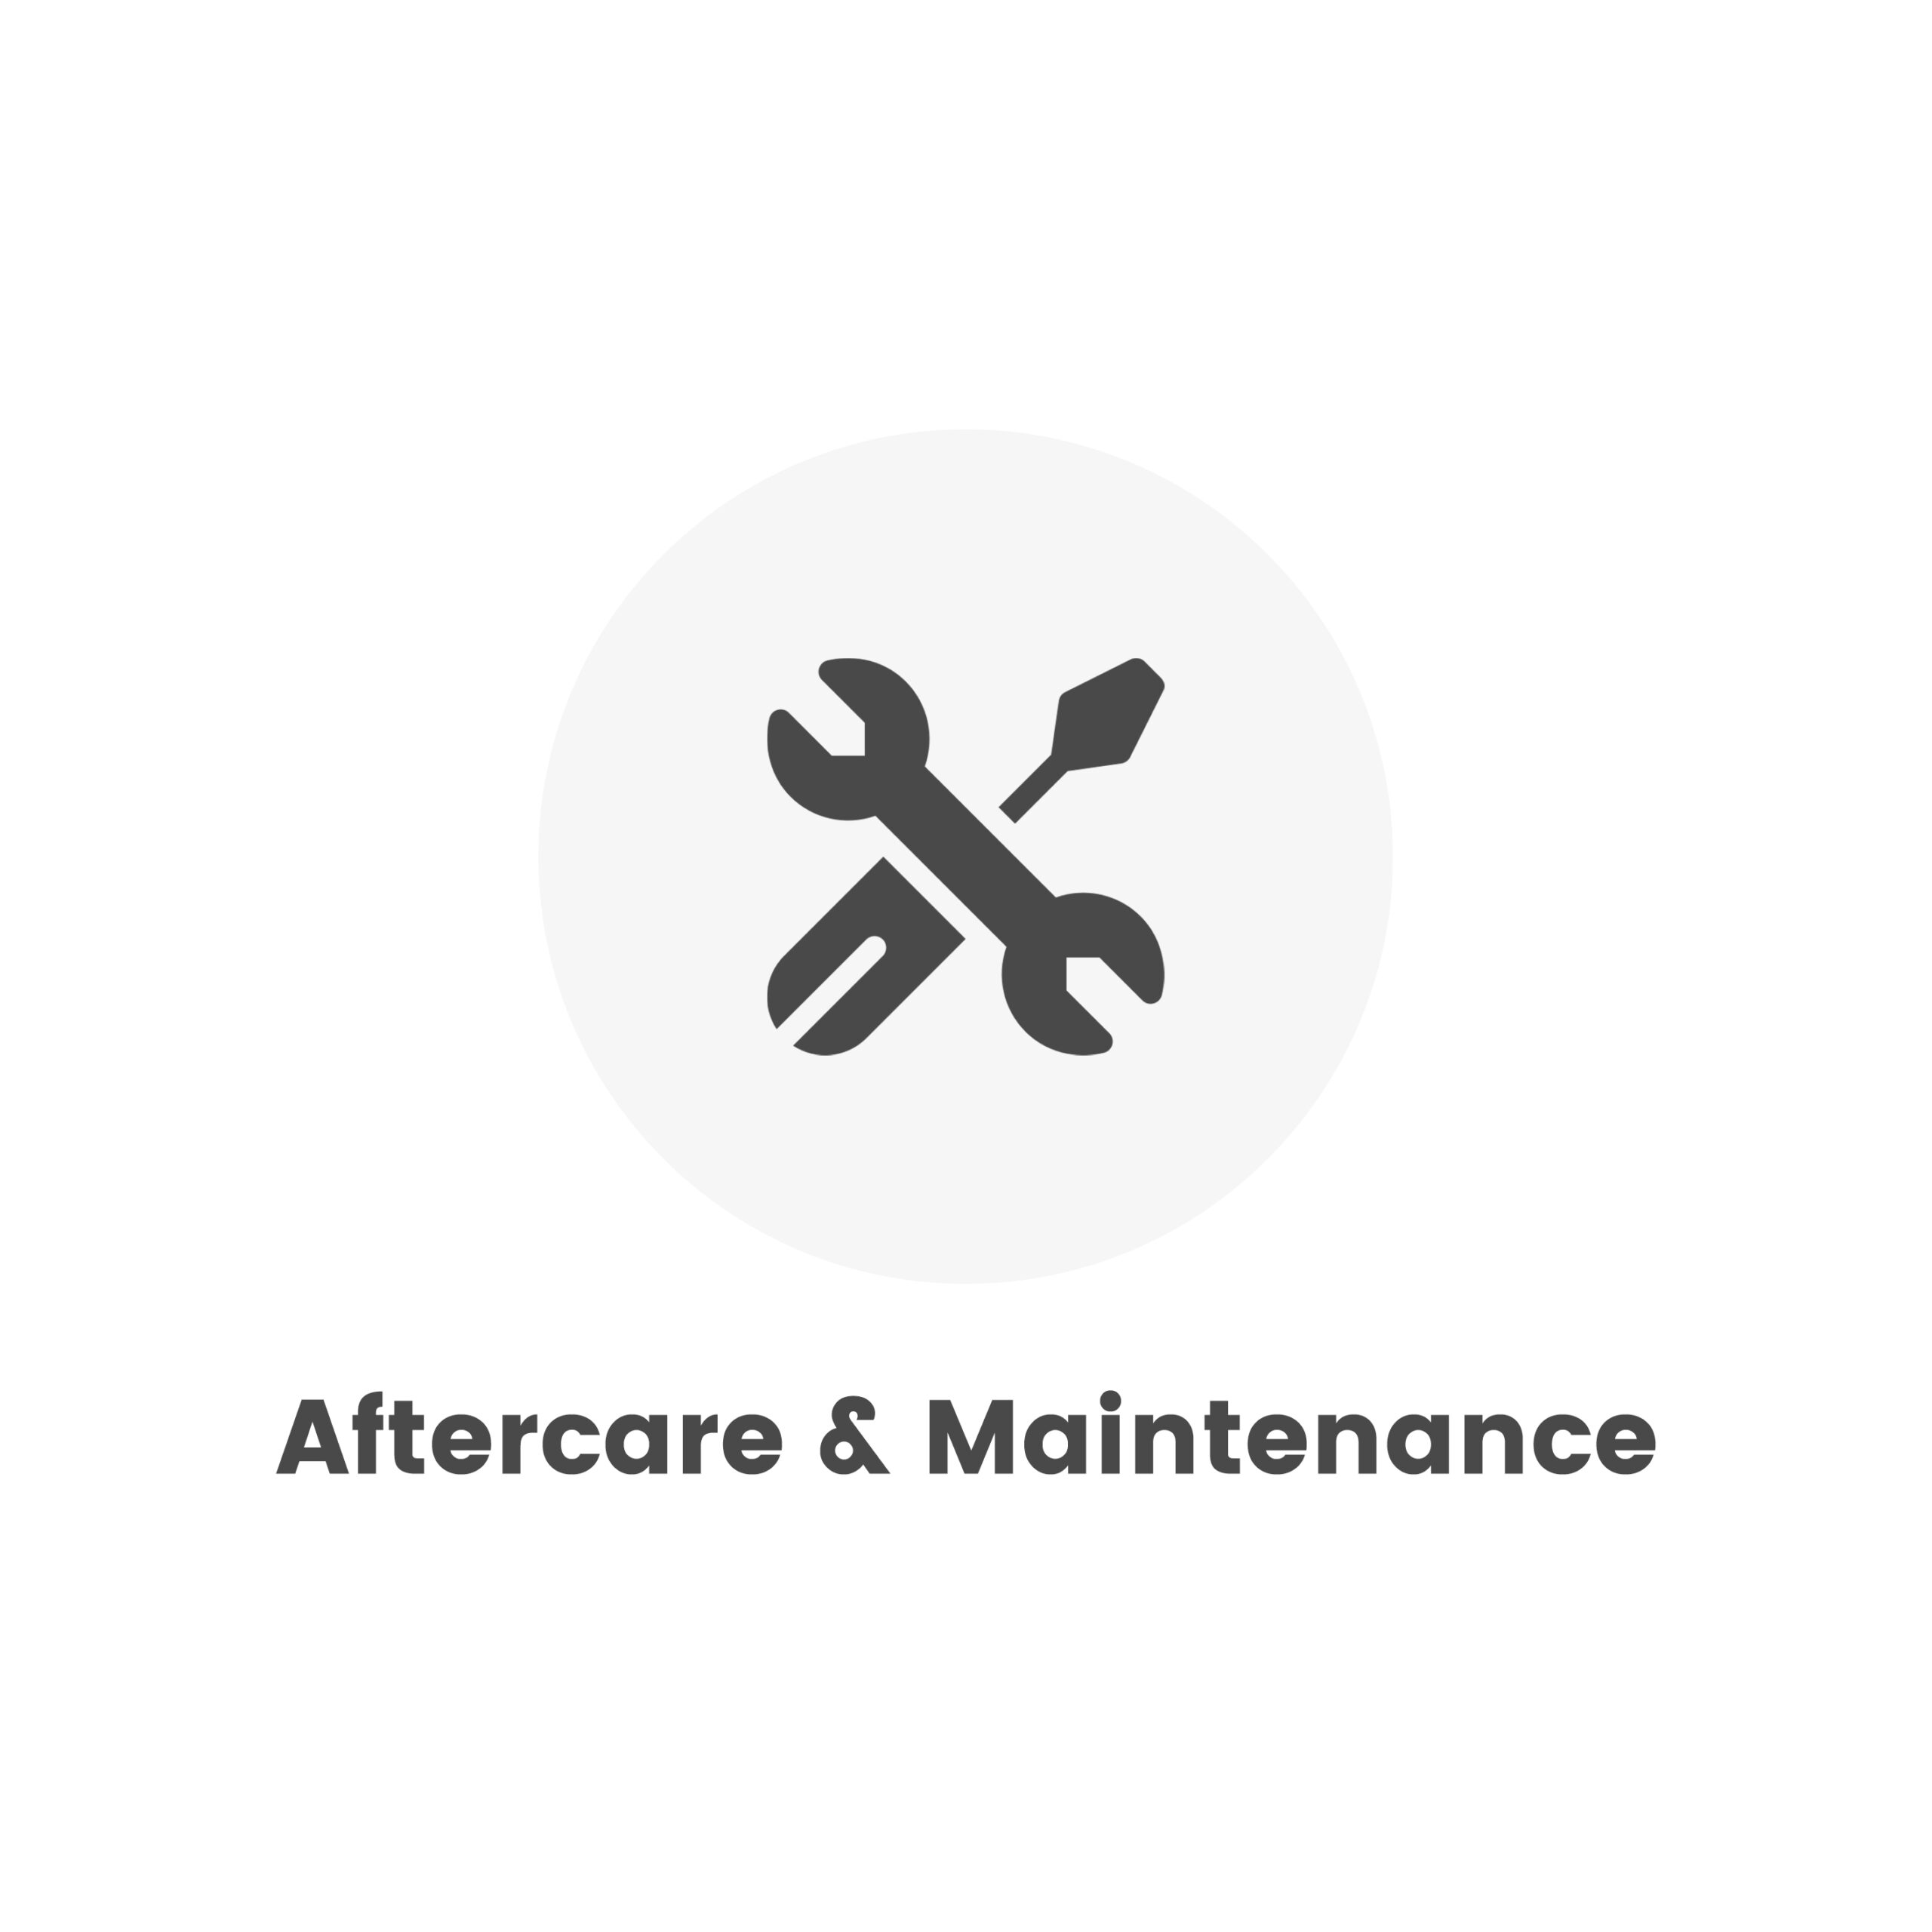 HighDecora 6 Aftercare & Maintenance